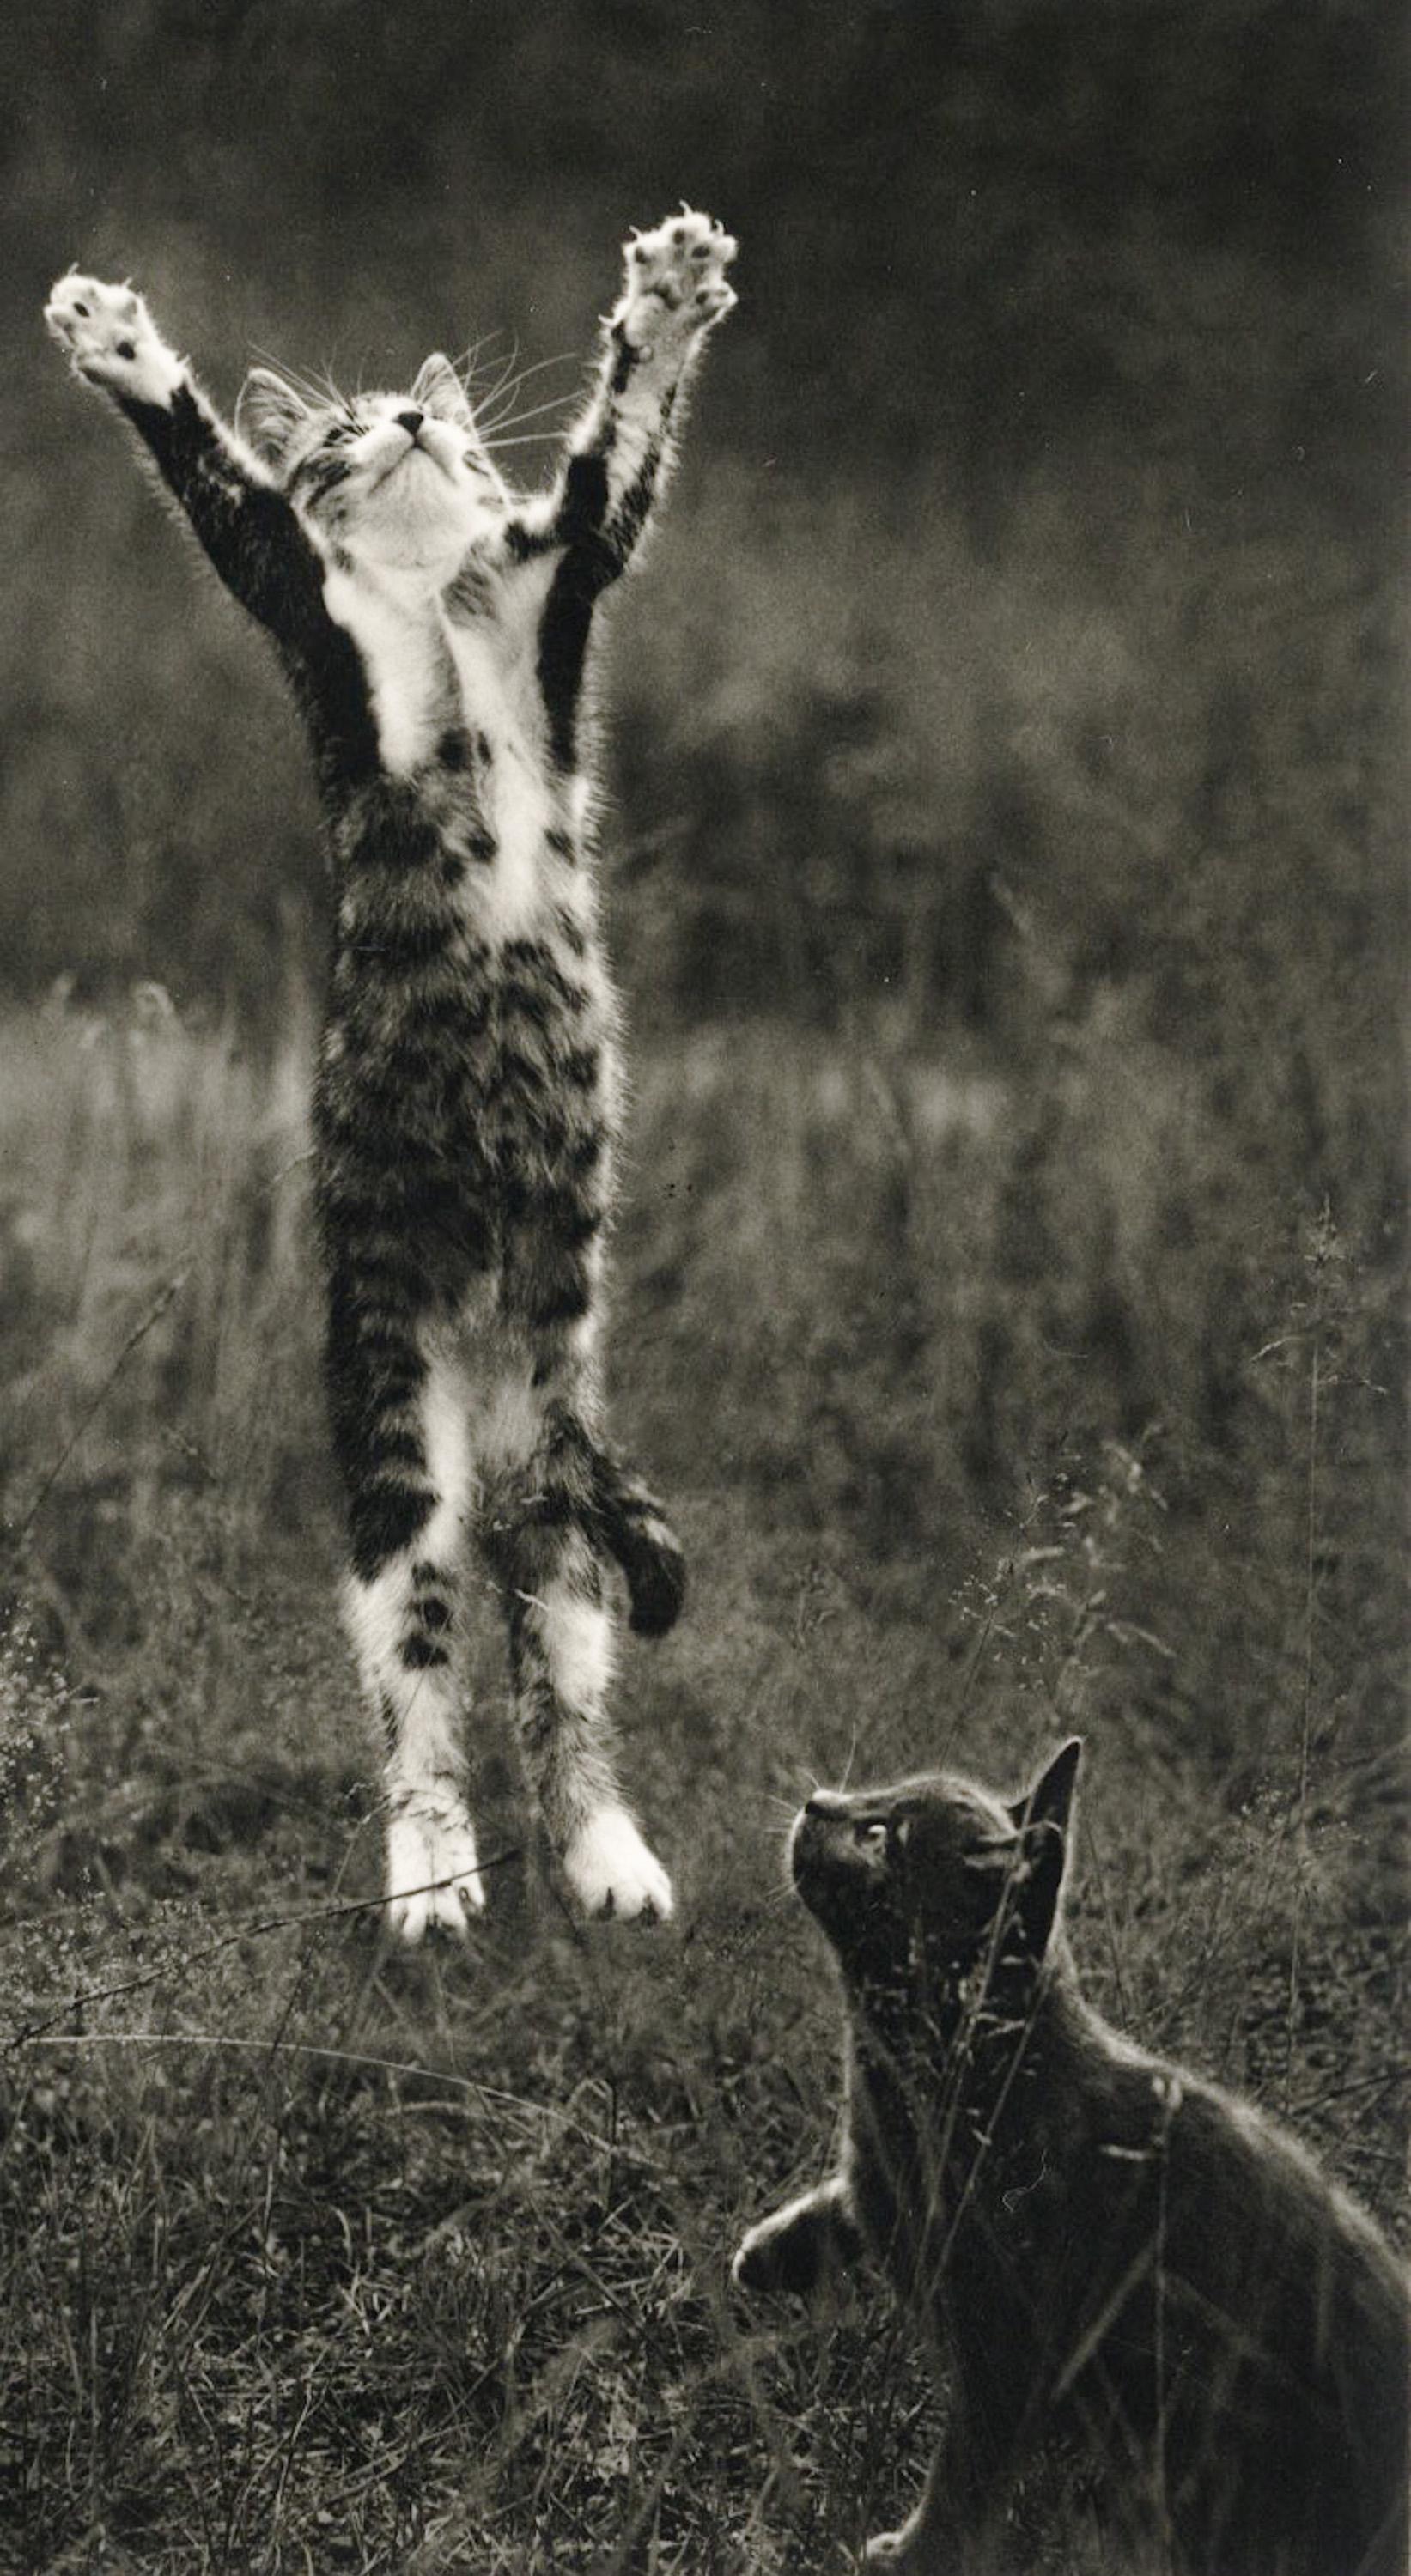 Pentti Sammallahti Black and White Photograph – Koylia, Finnland (Zwei Kitten spielen auf einem Feld)